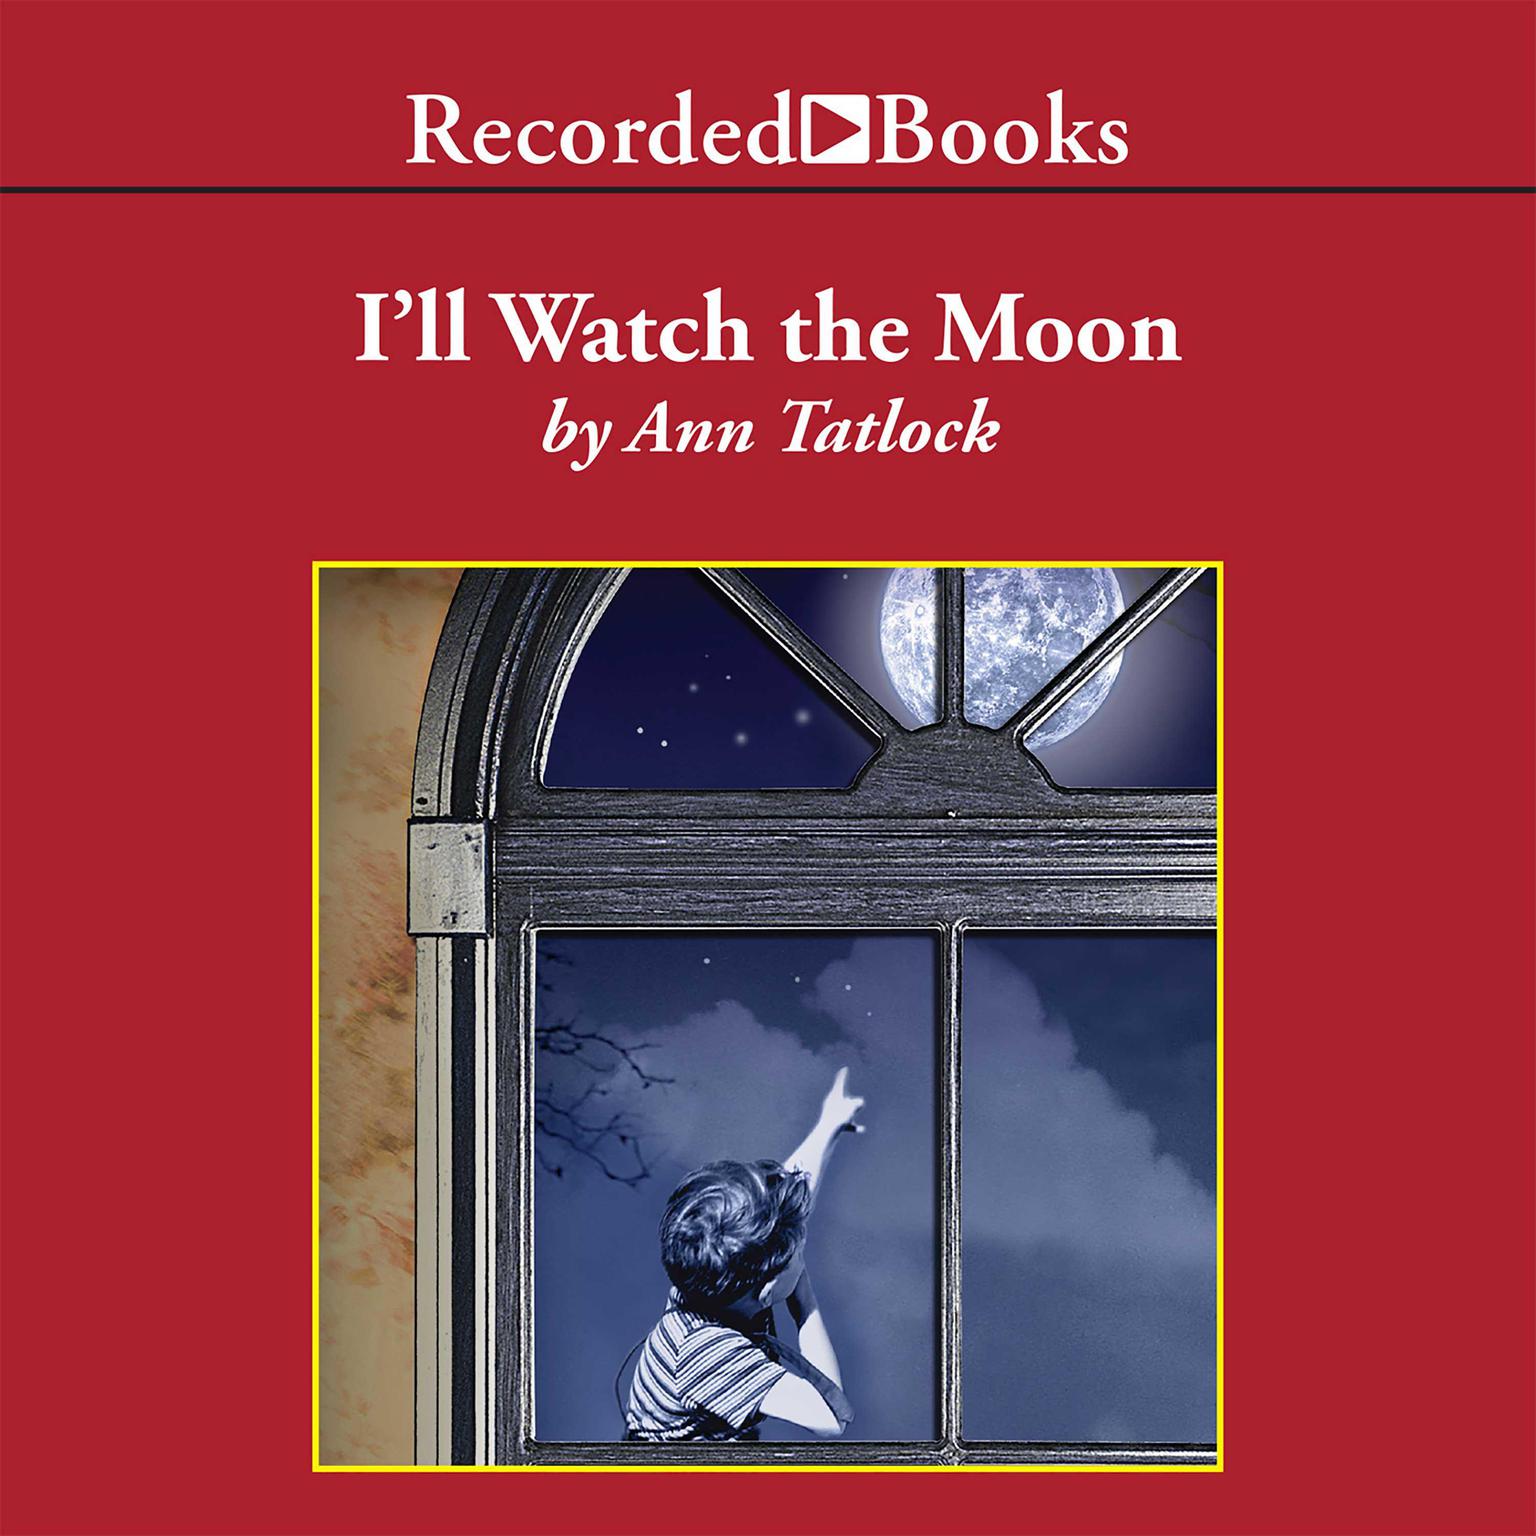 Ill Watch the Moon Audiobook, by Ann Tatlock